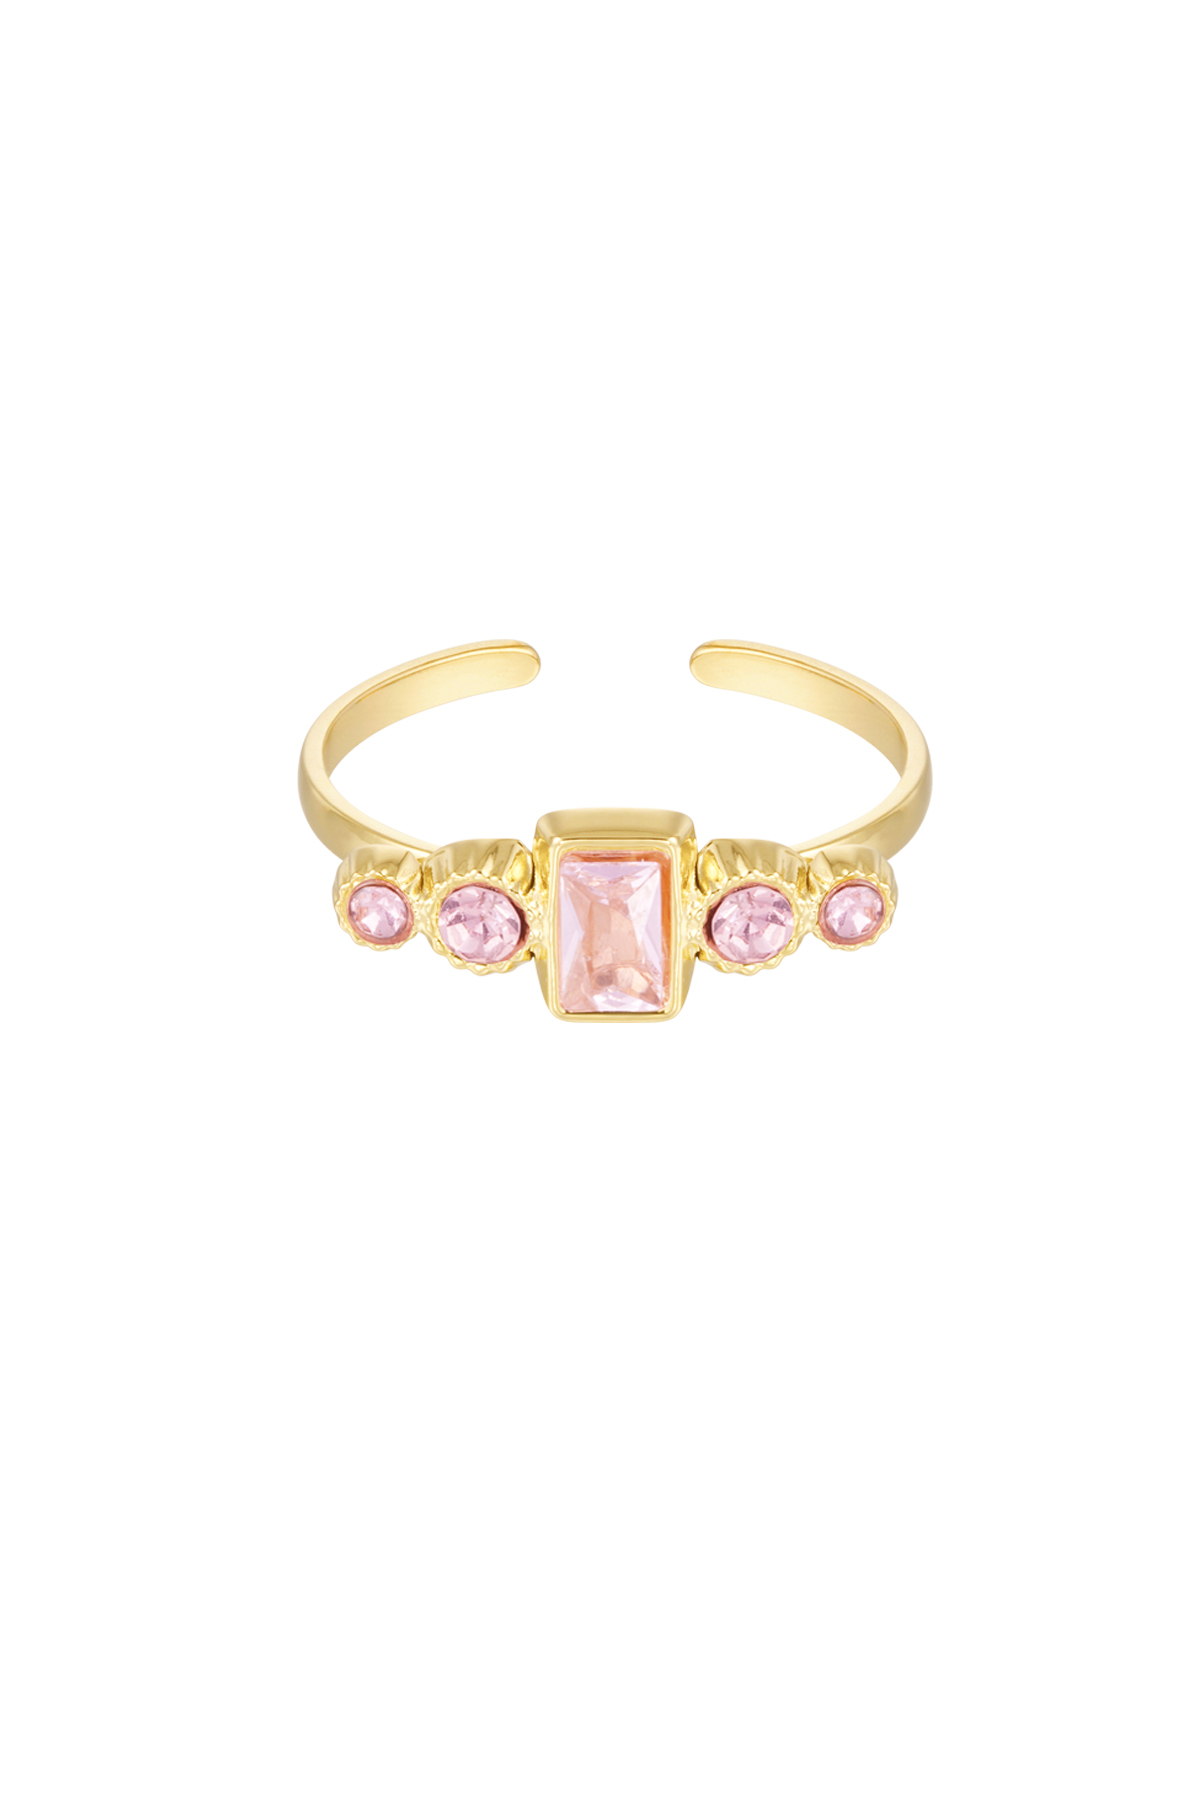 Ring roze steen - goud h5 